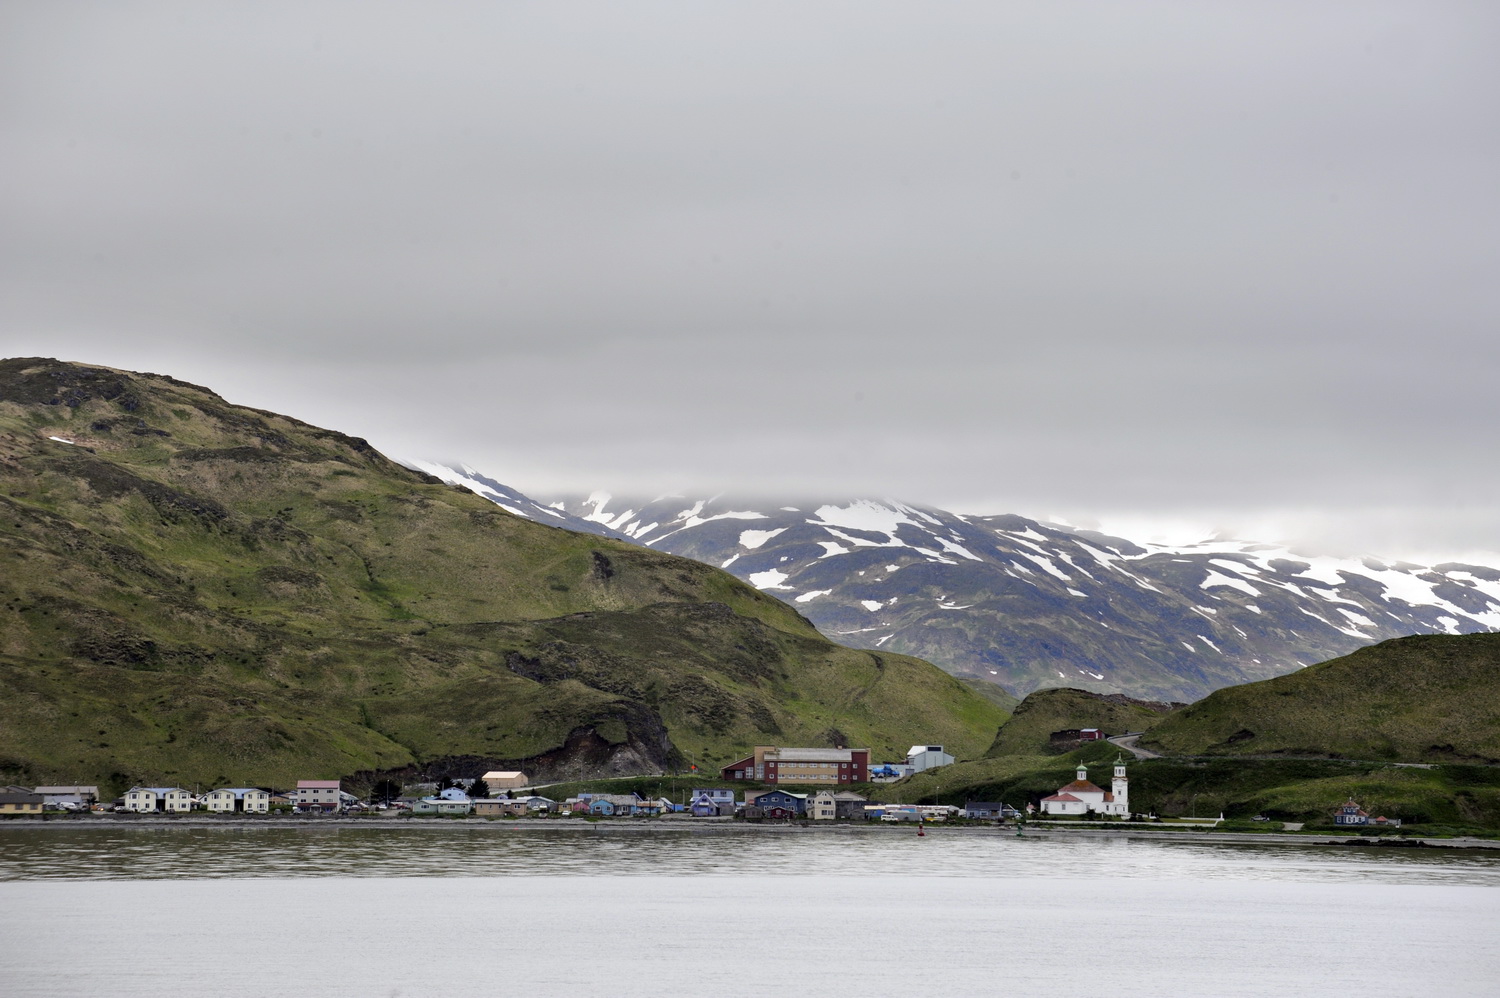 Dolph Kessler - Aleutian Islands to Dutch Harbour, Alaska 